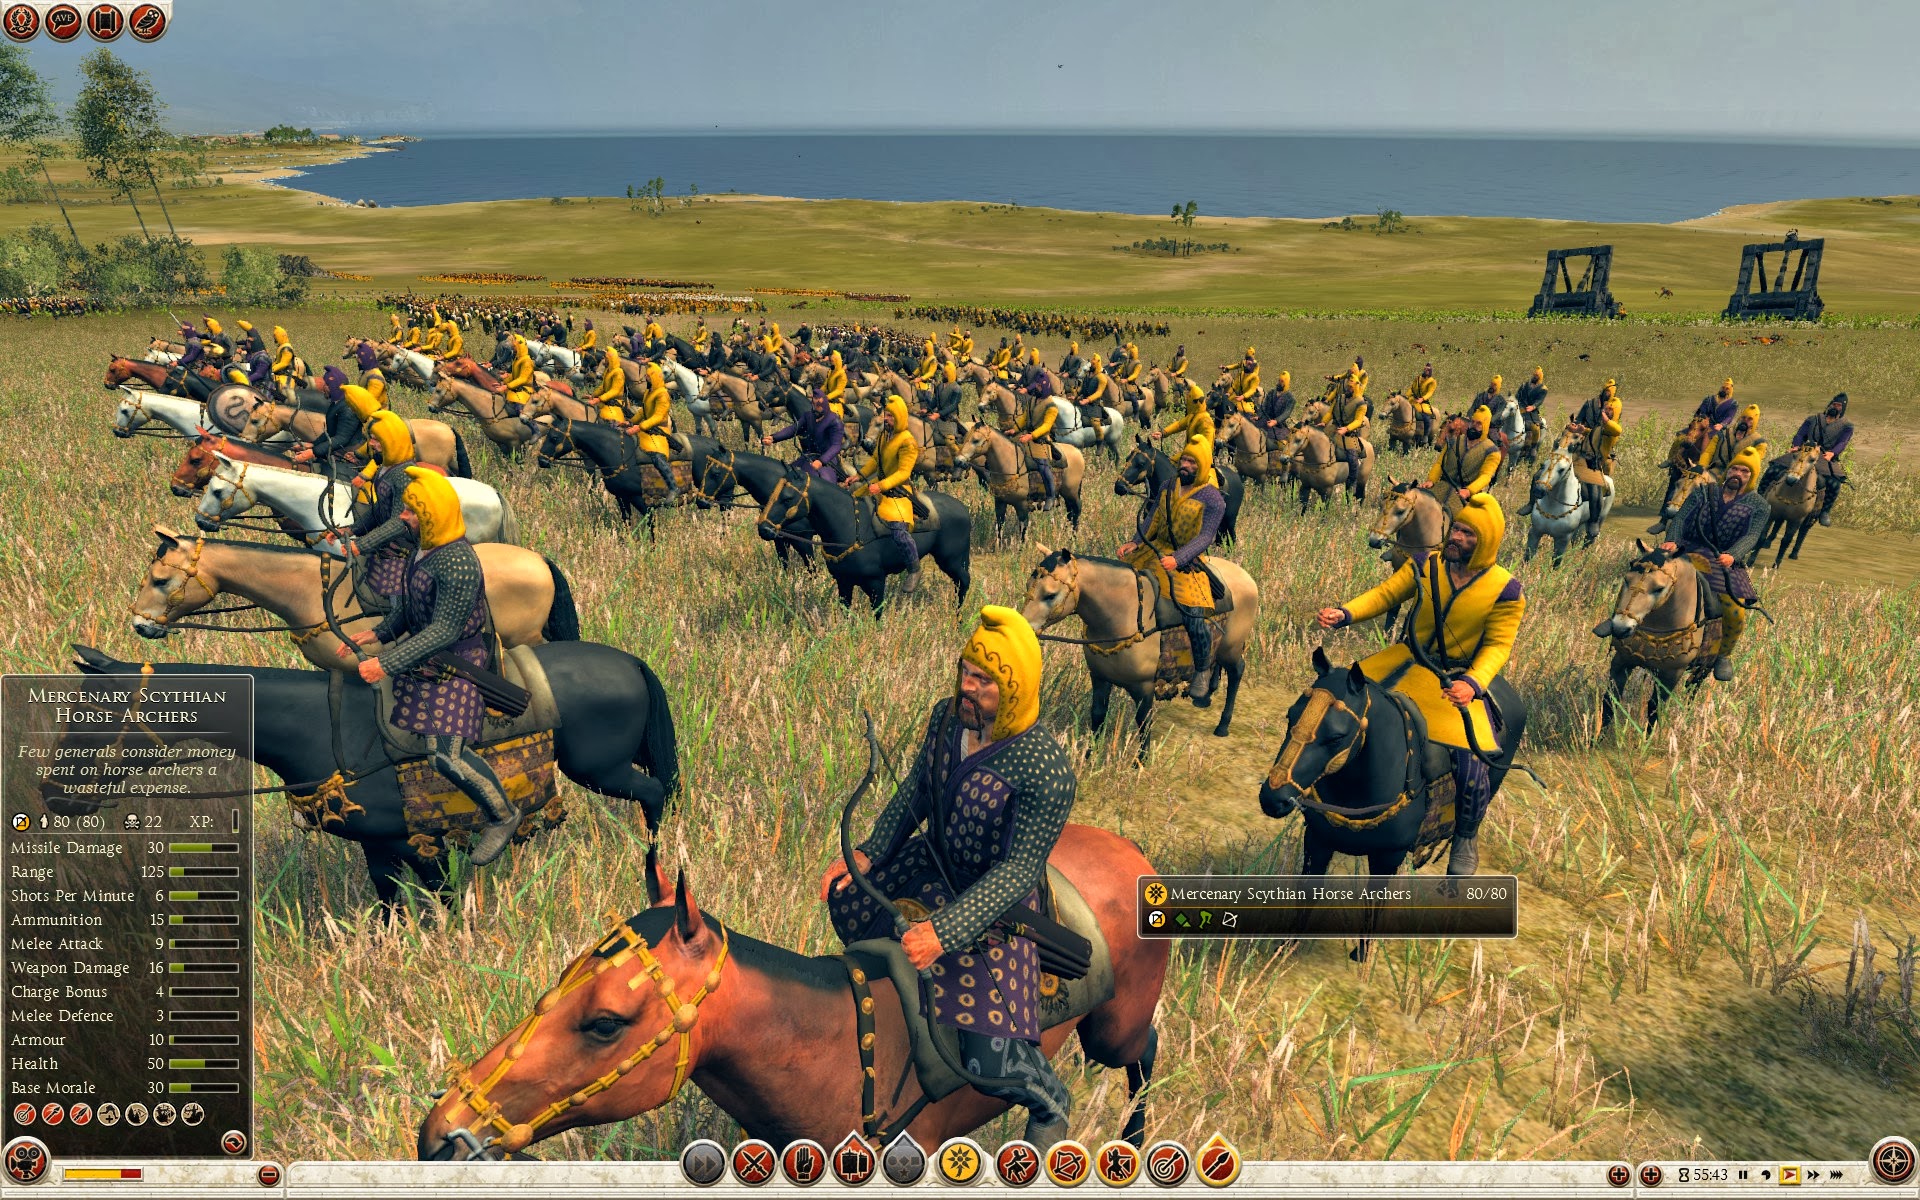 Mercenary Scythian Horse Archers